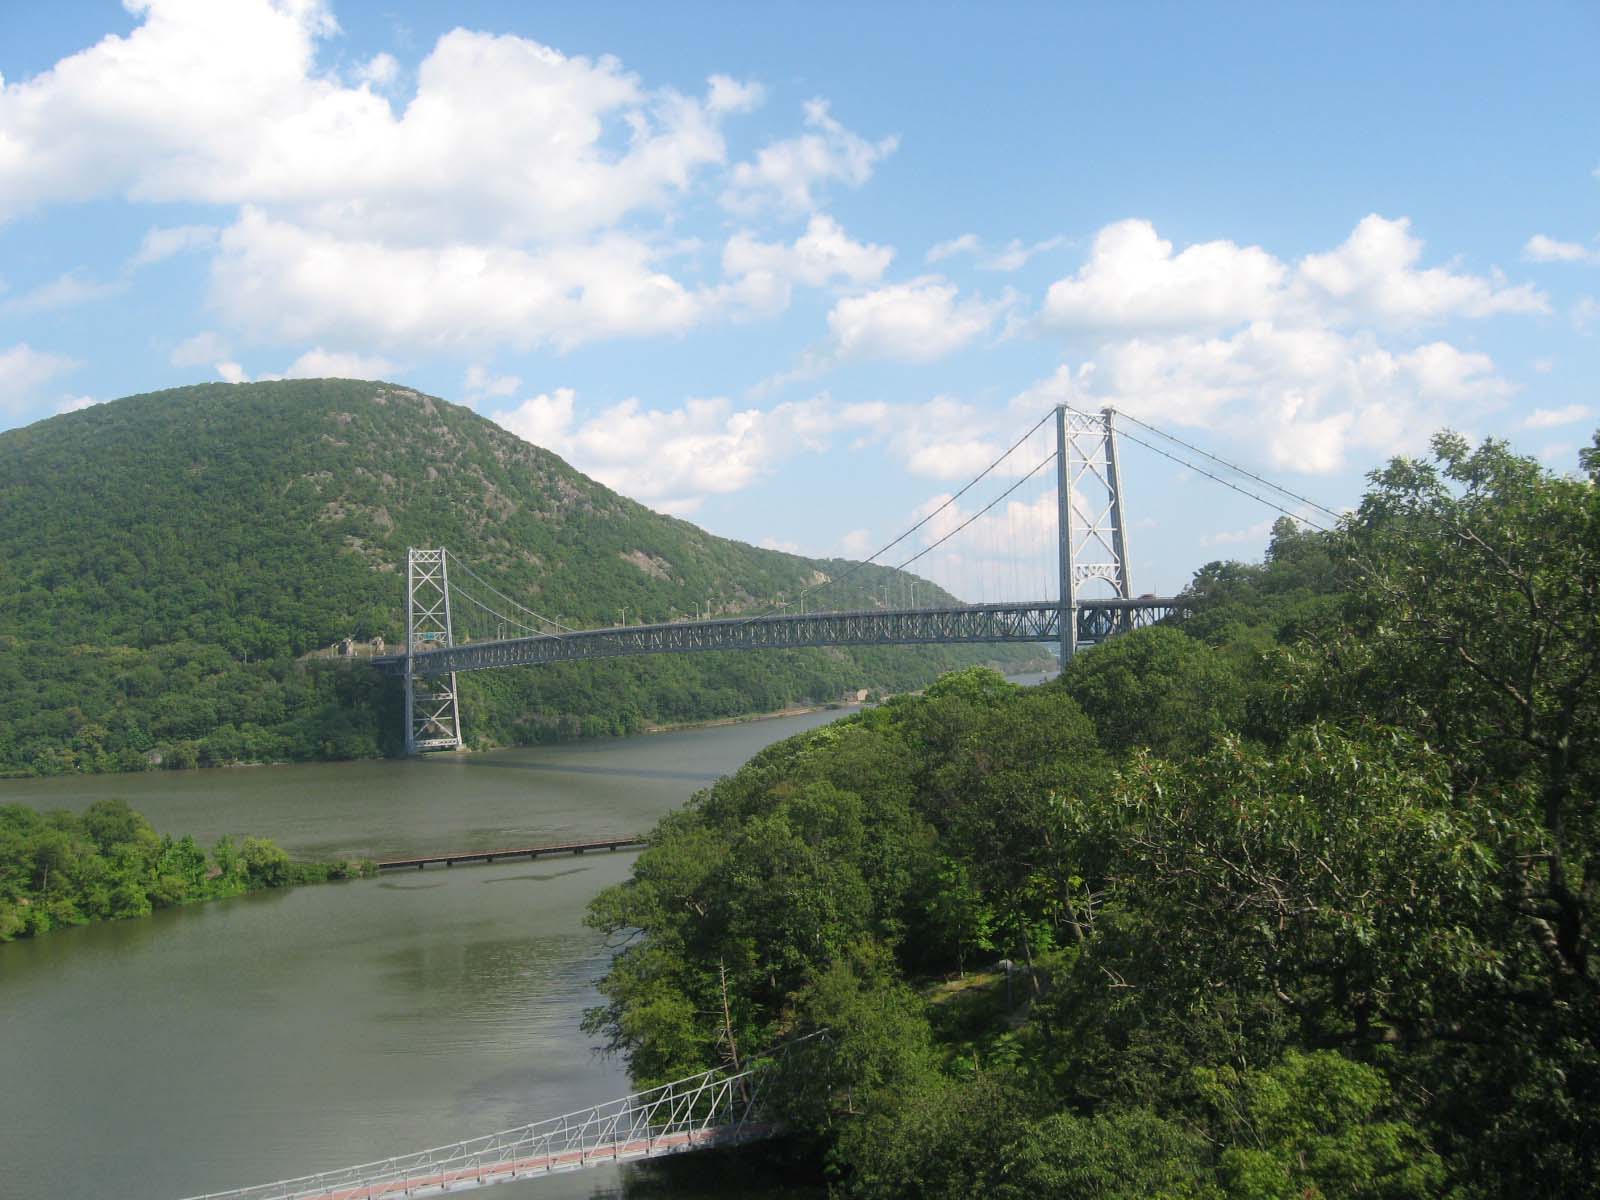 The Hudson River and Bear Mountain Bridge.